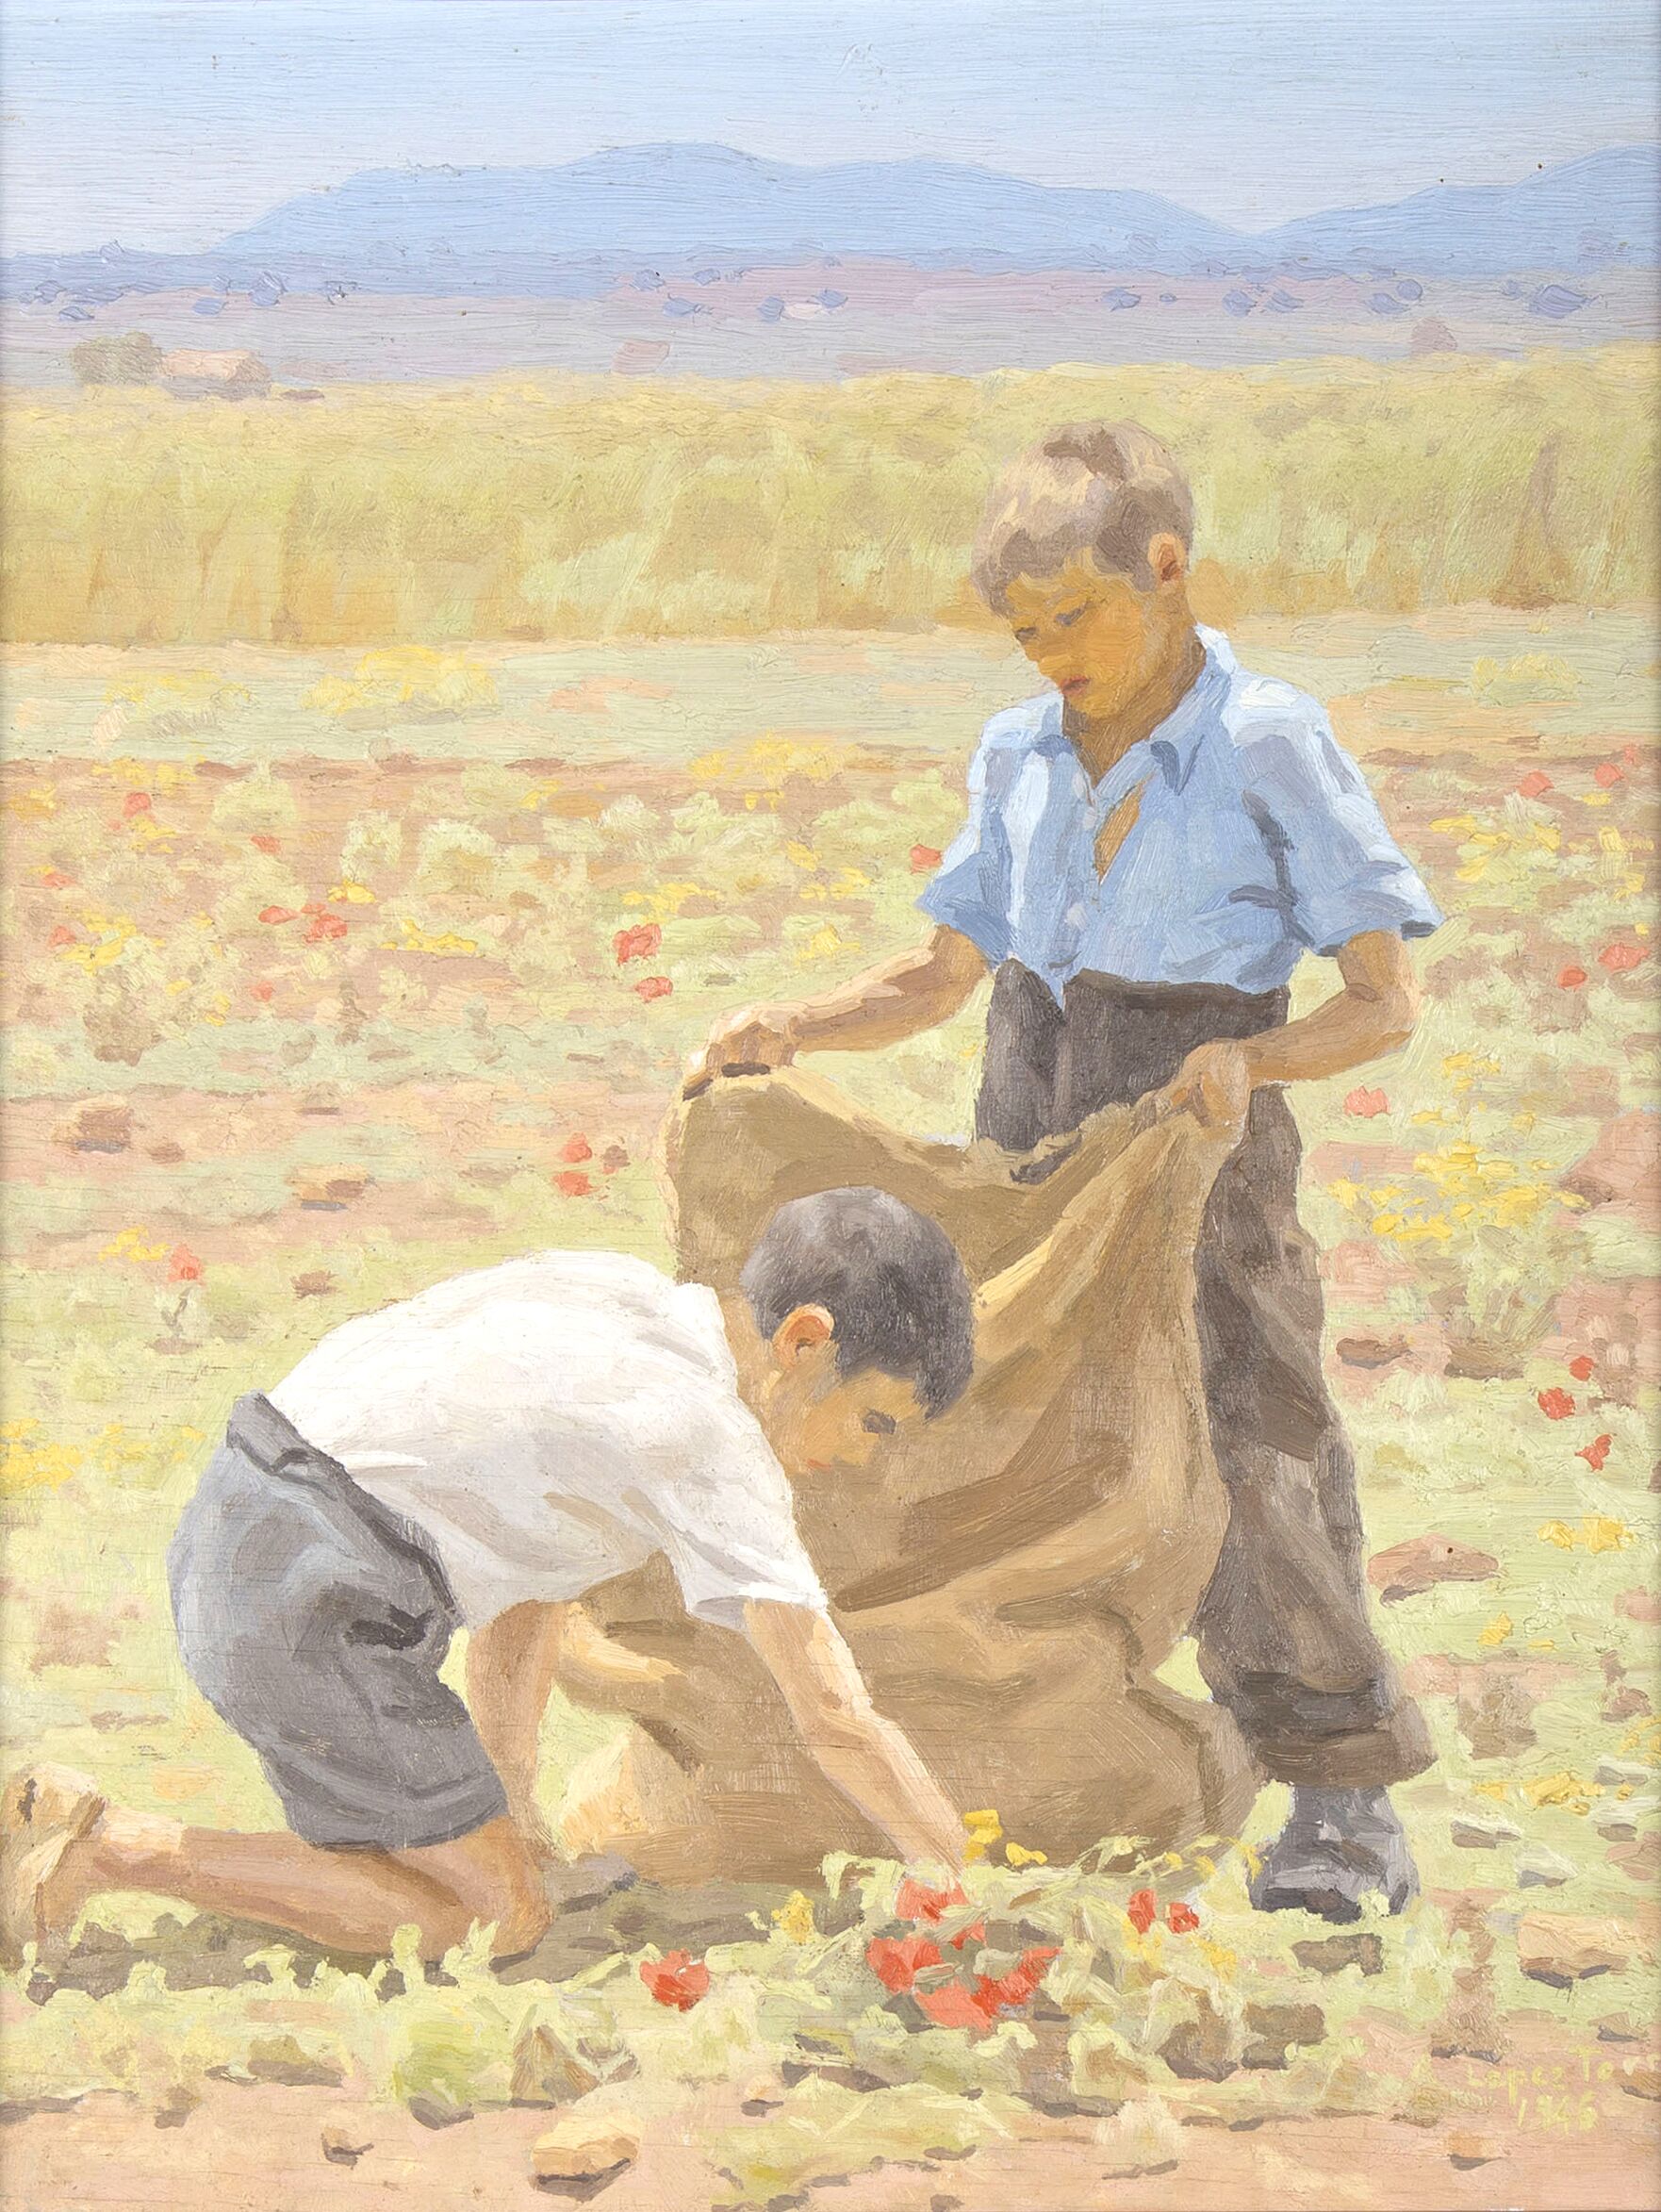 Boys collecting grass